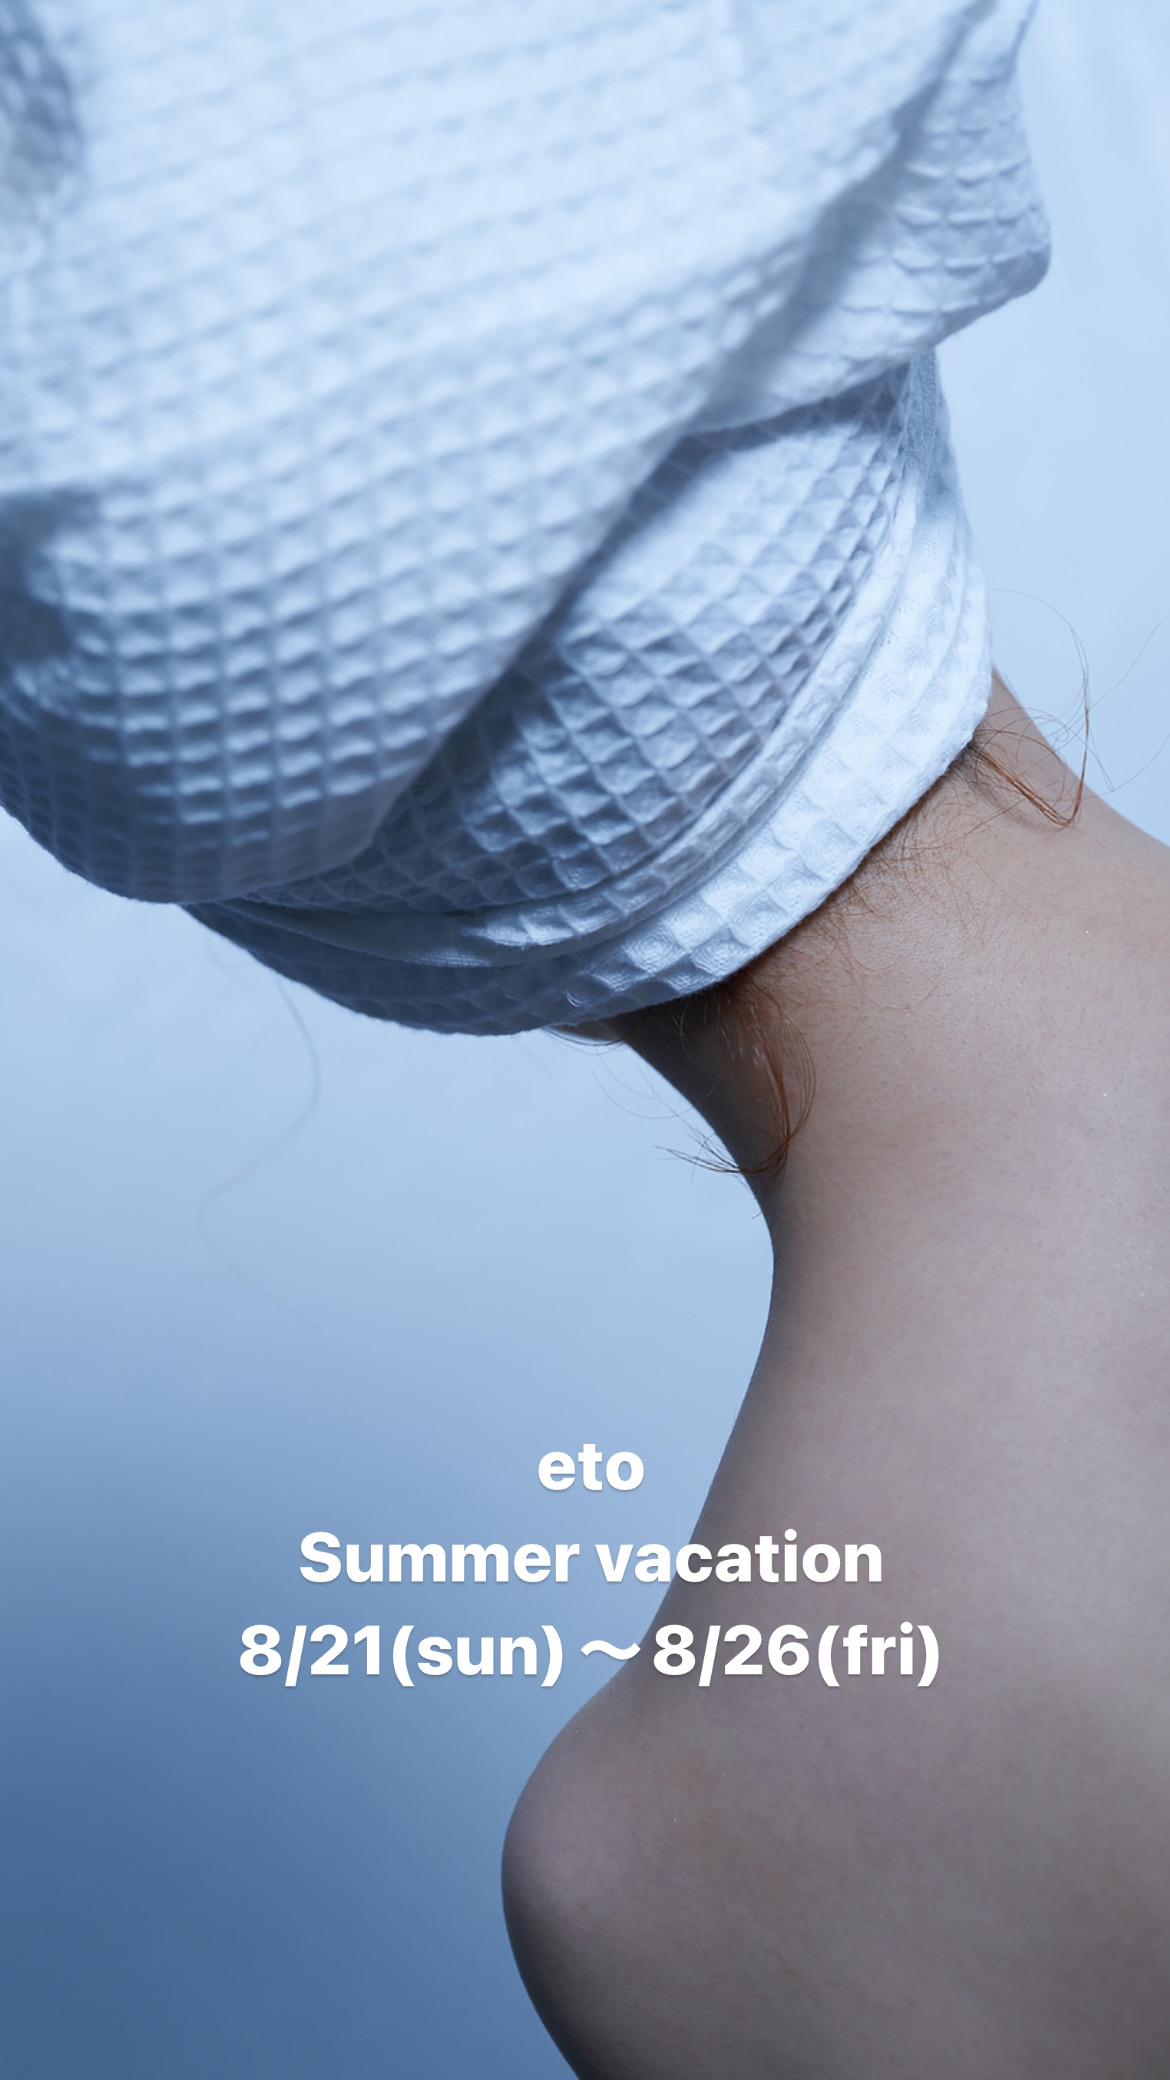 eto Summer vacation